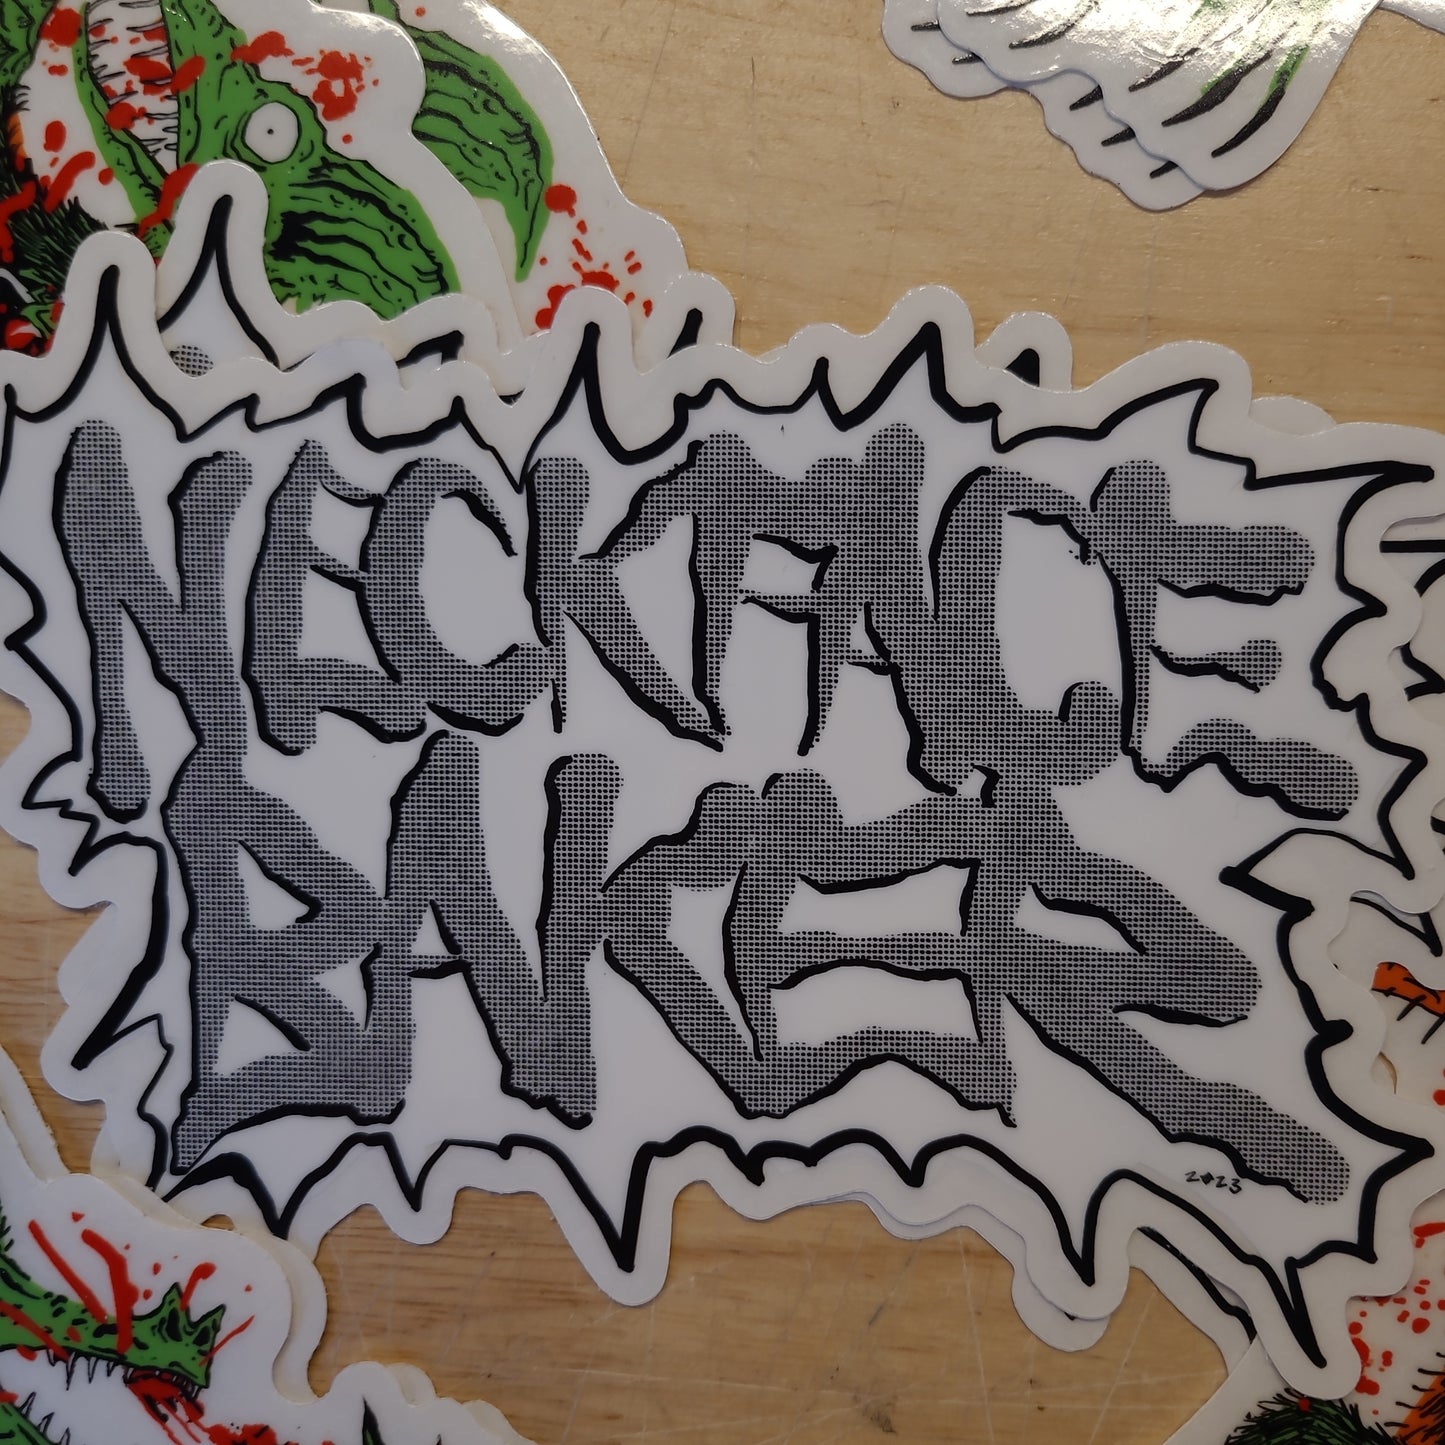 Baker x Neckface - Toxic Rats Stickers